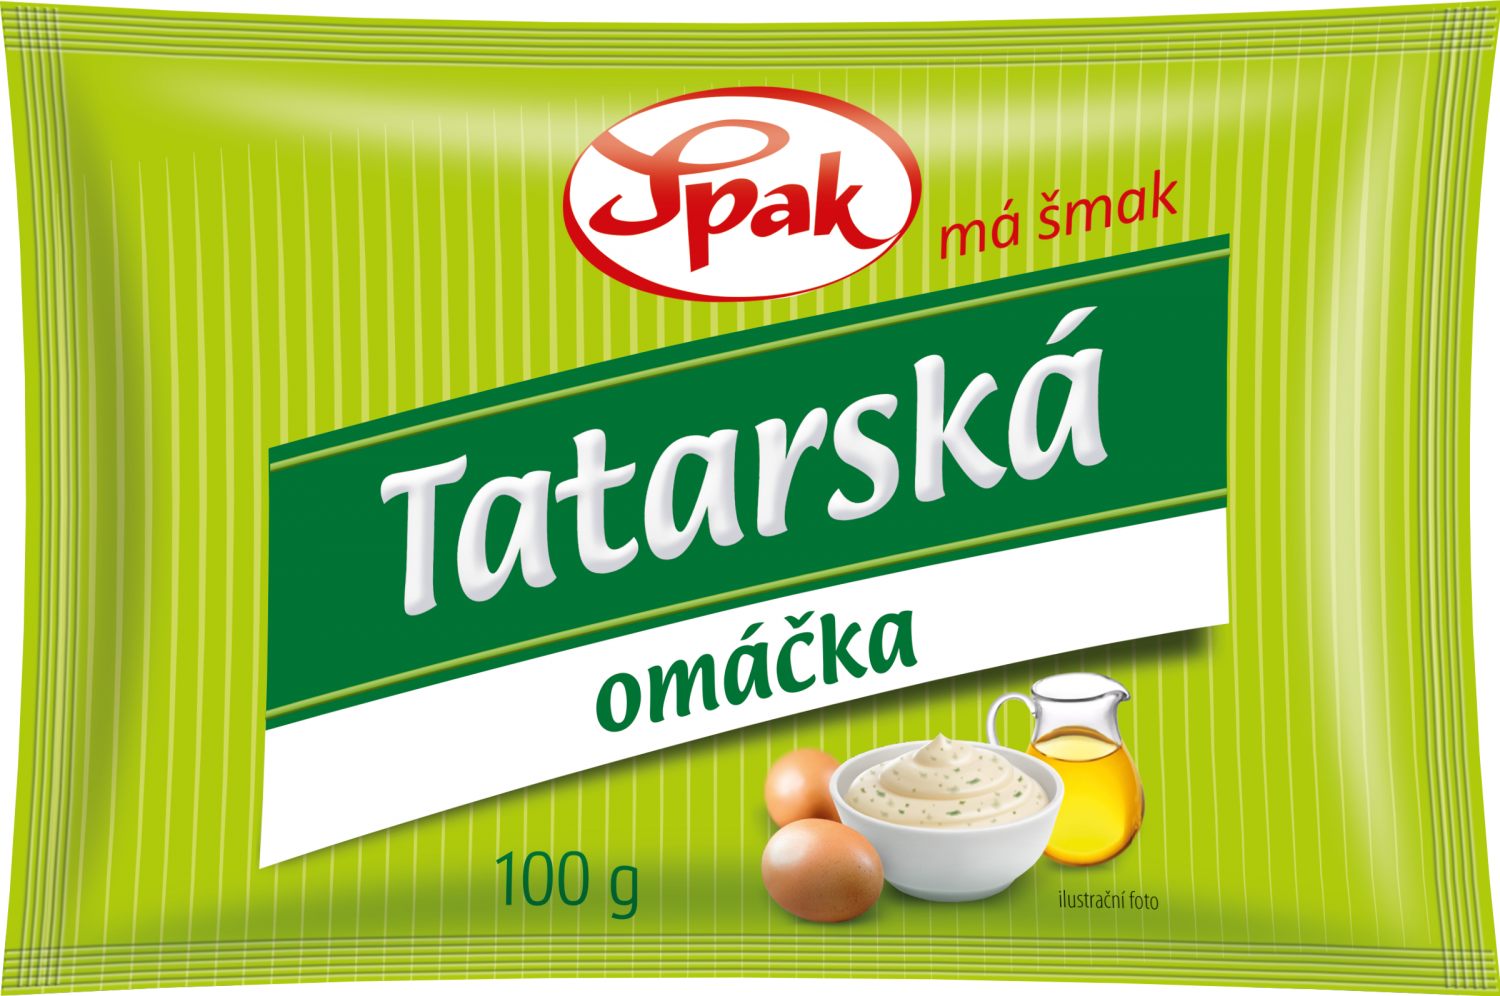 Tatarska-omacka-SPAK-100g-20210506